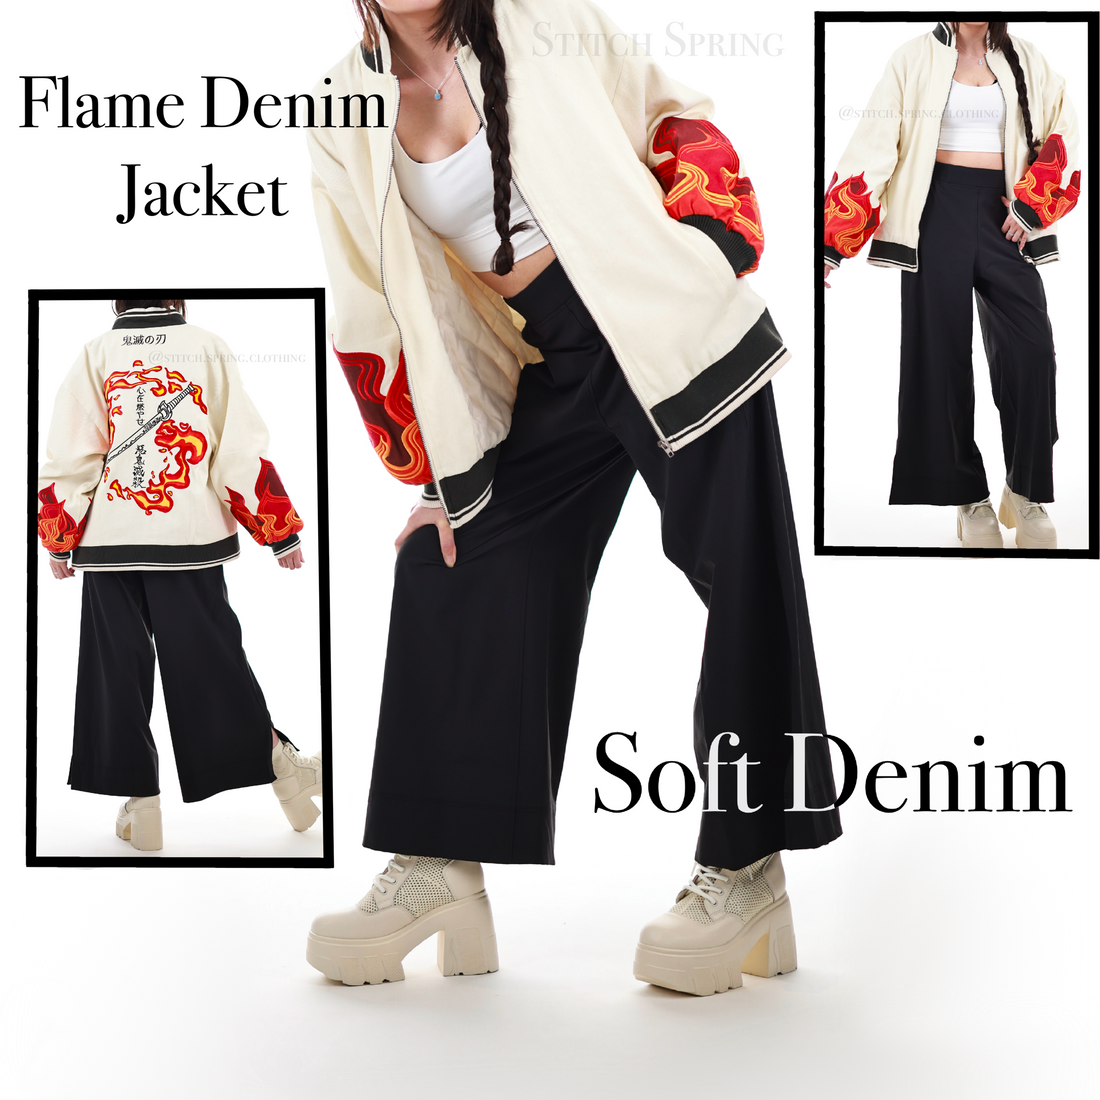 Flame Denim Jacket Preorder